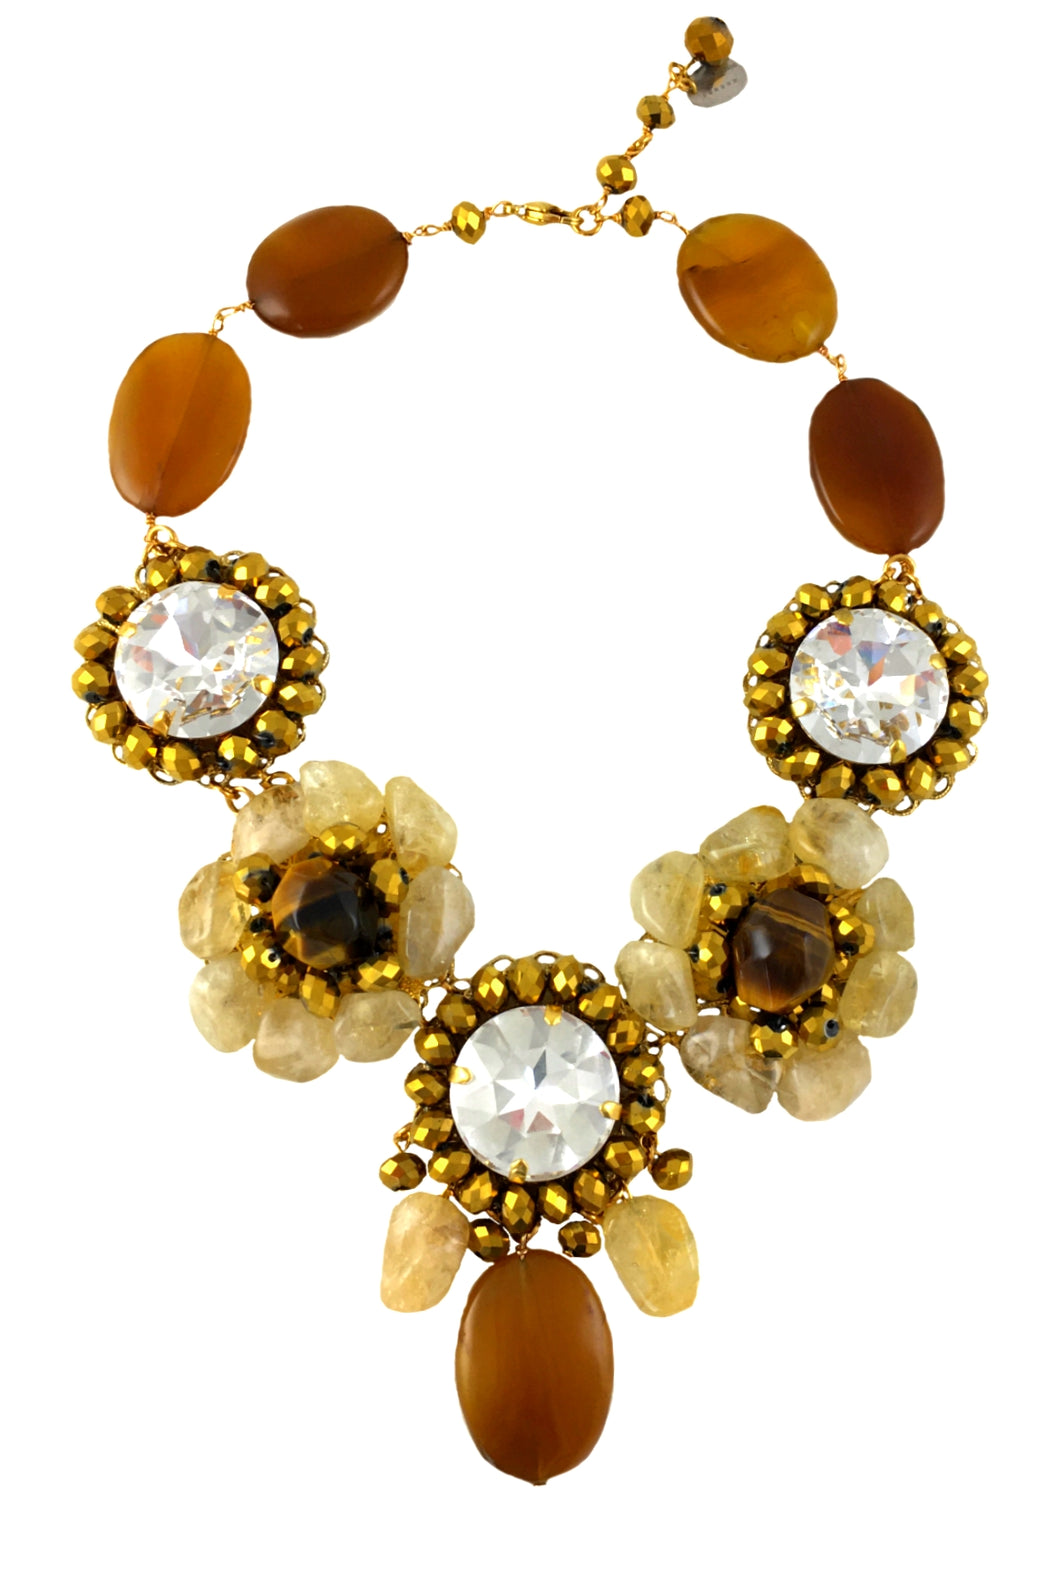 SALE - Elizabeth Agate and Swarovski Crystal Necklace